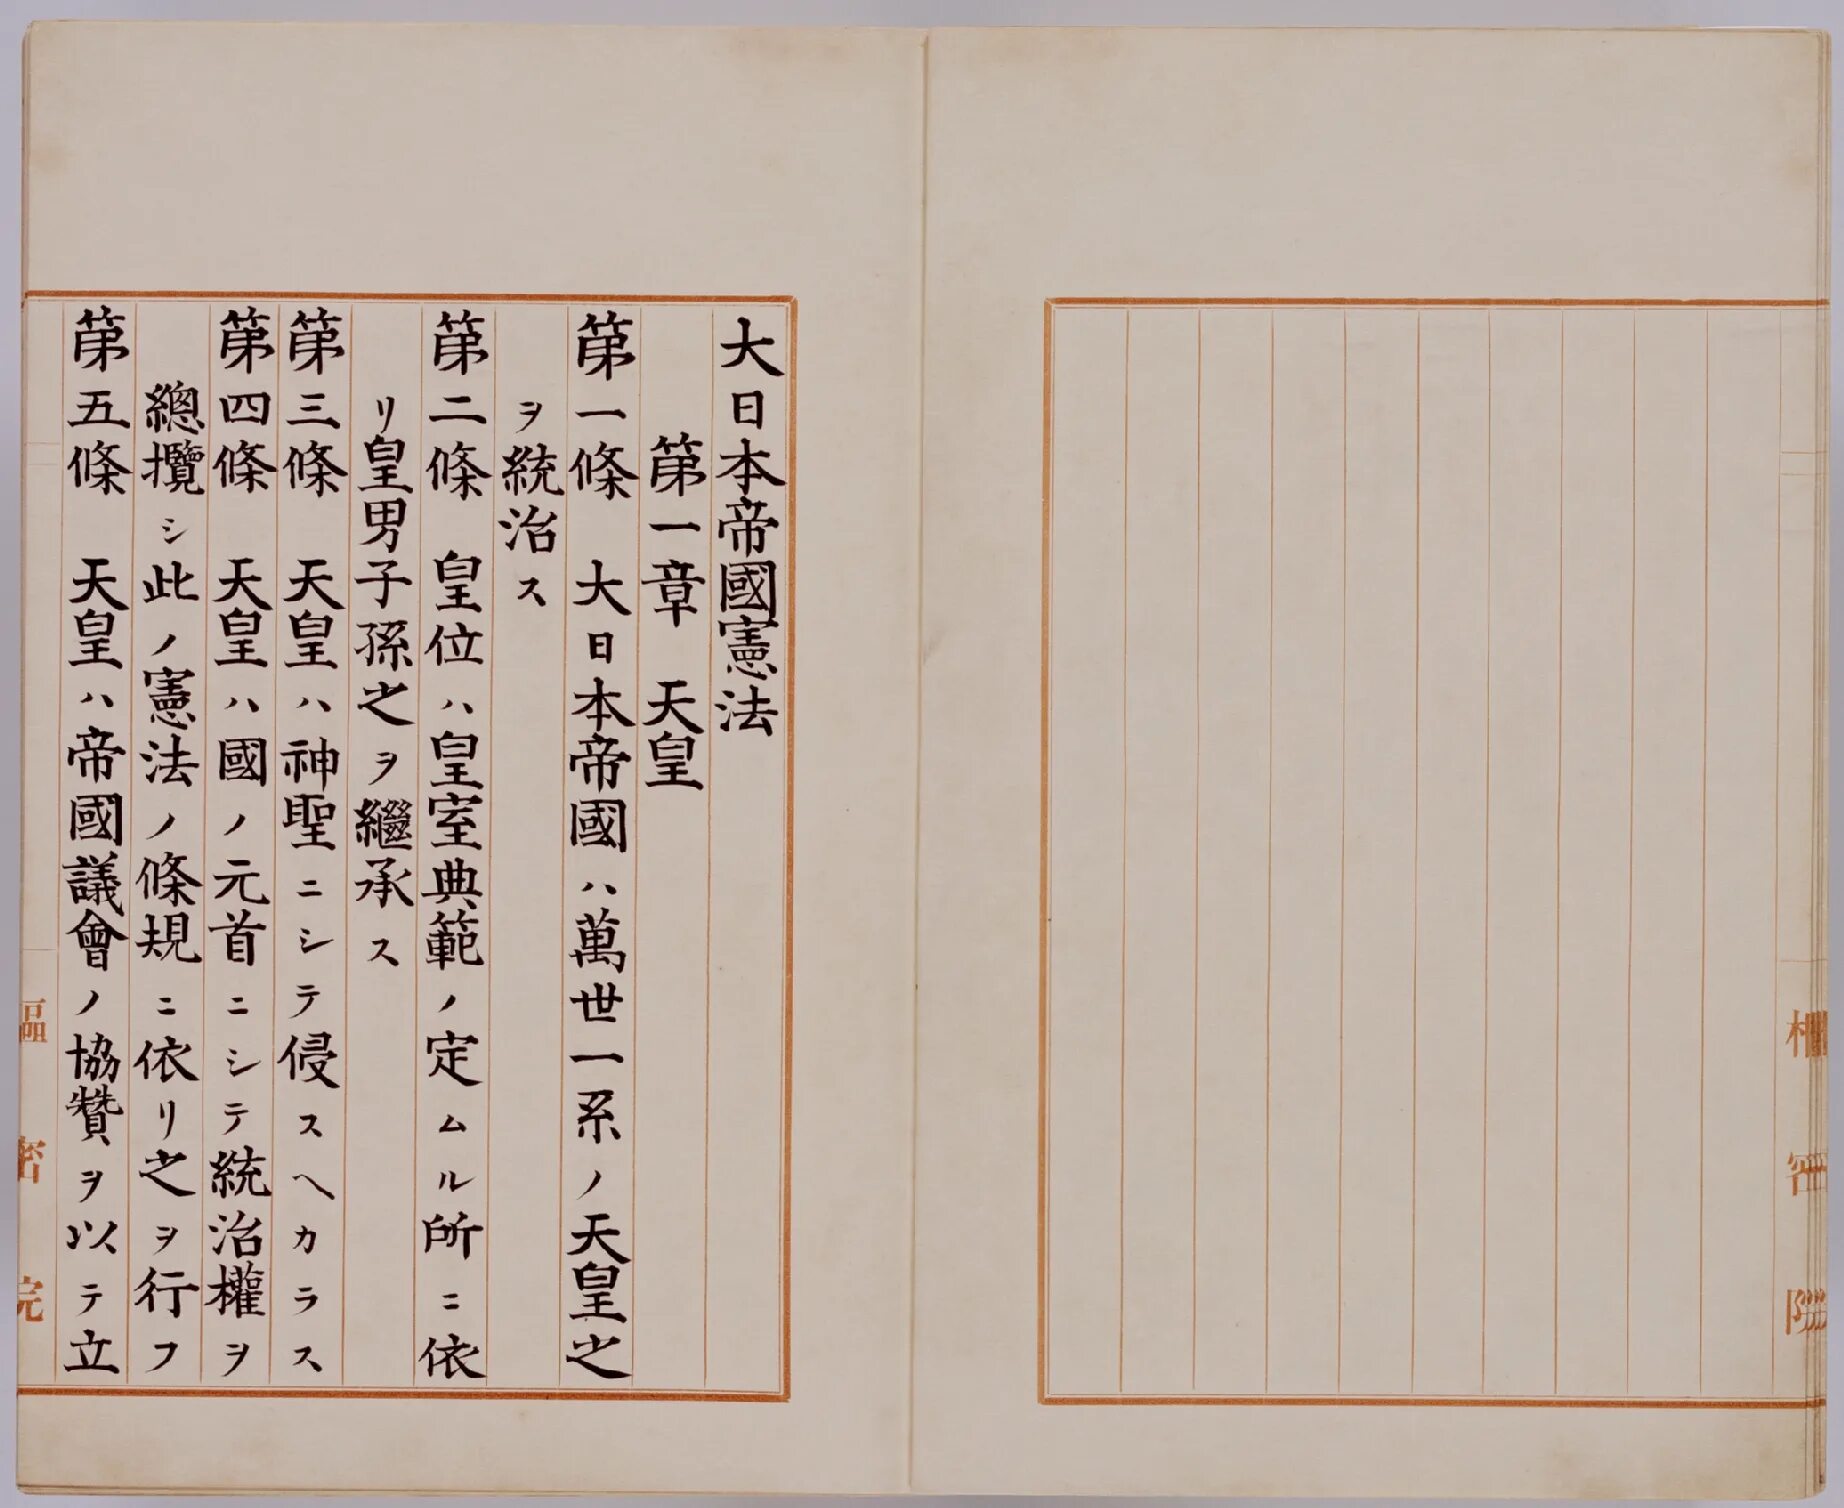 1889 г япония. Конституция японской империи 1889. Конституция Японии 1889 года. Конституция Японии 1947. Конституция Мэйдзи 1889.